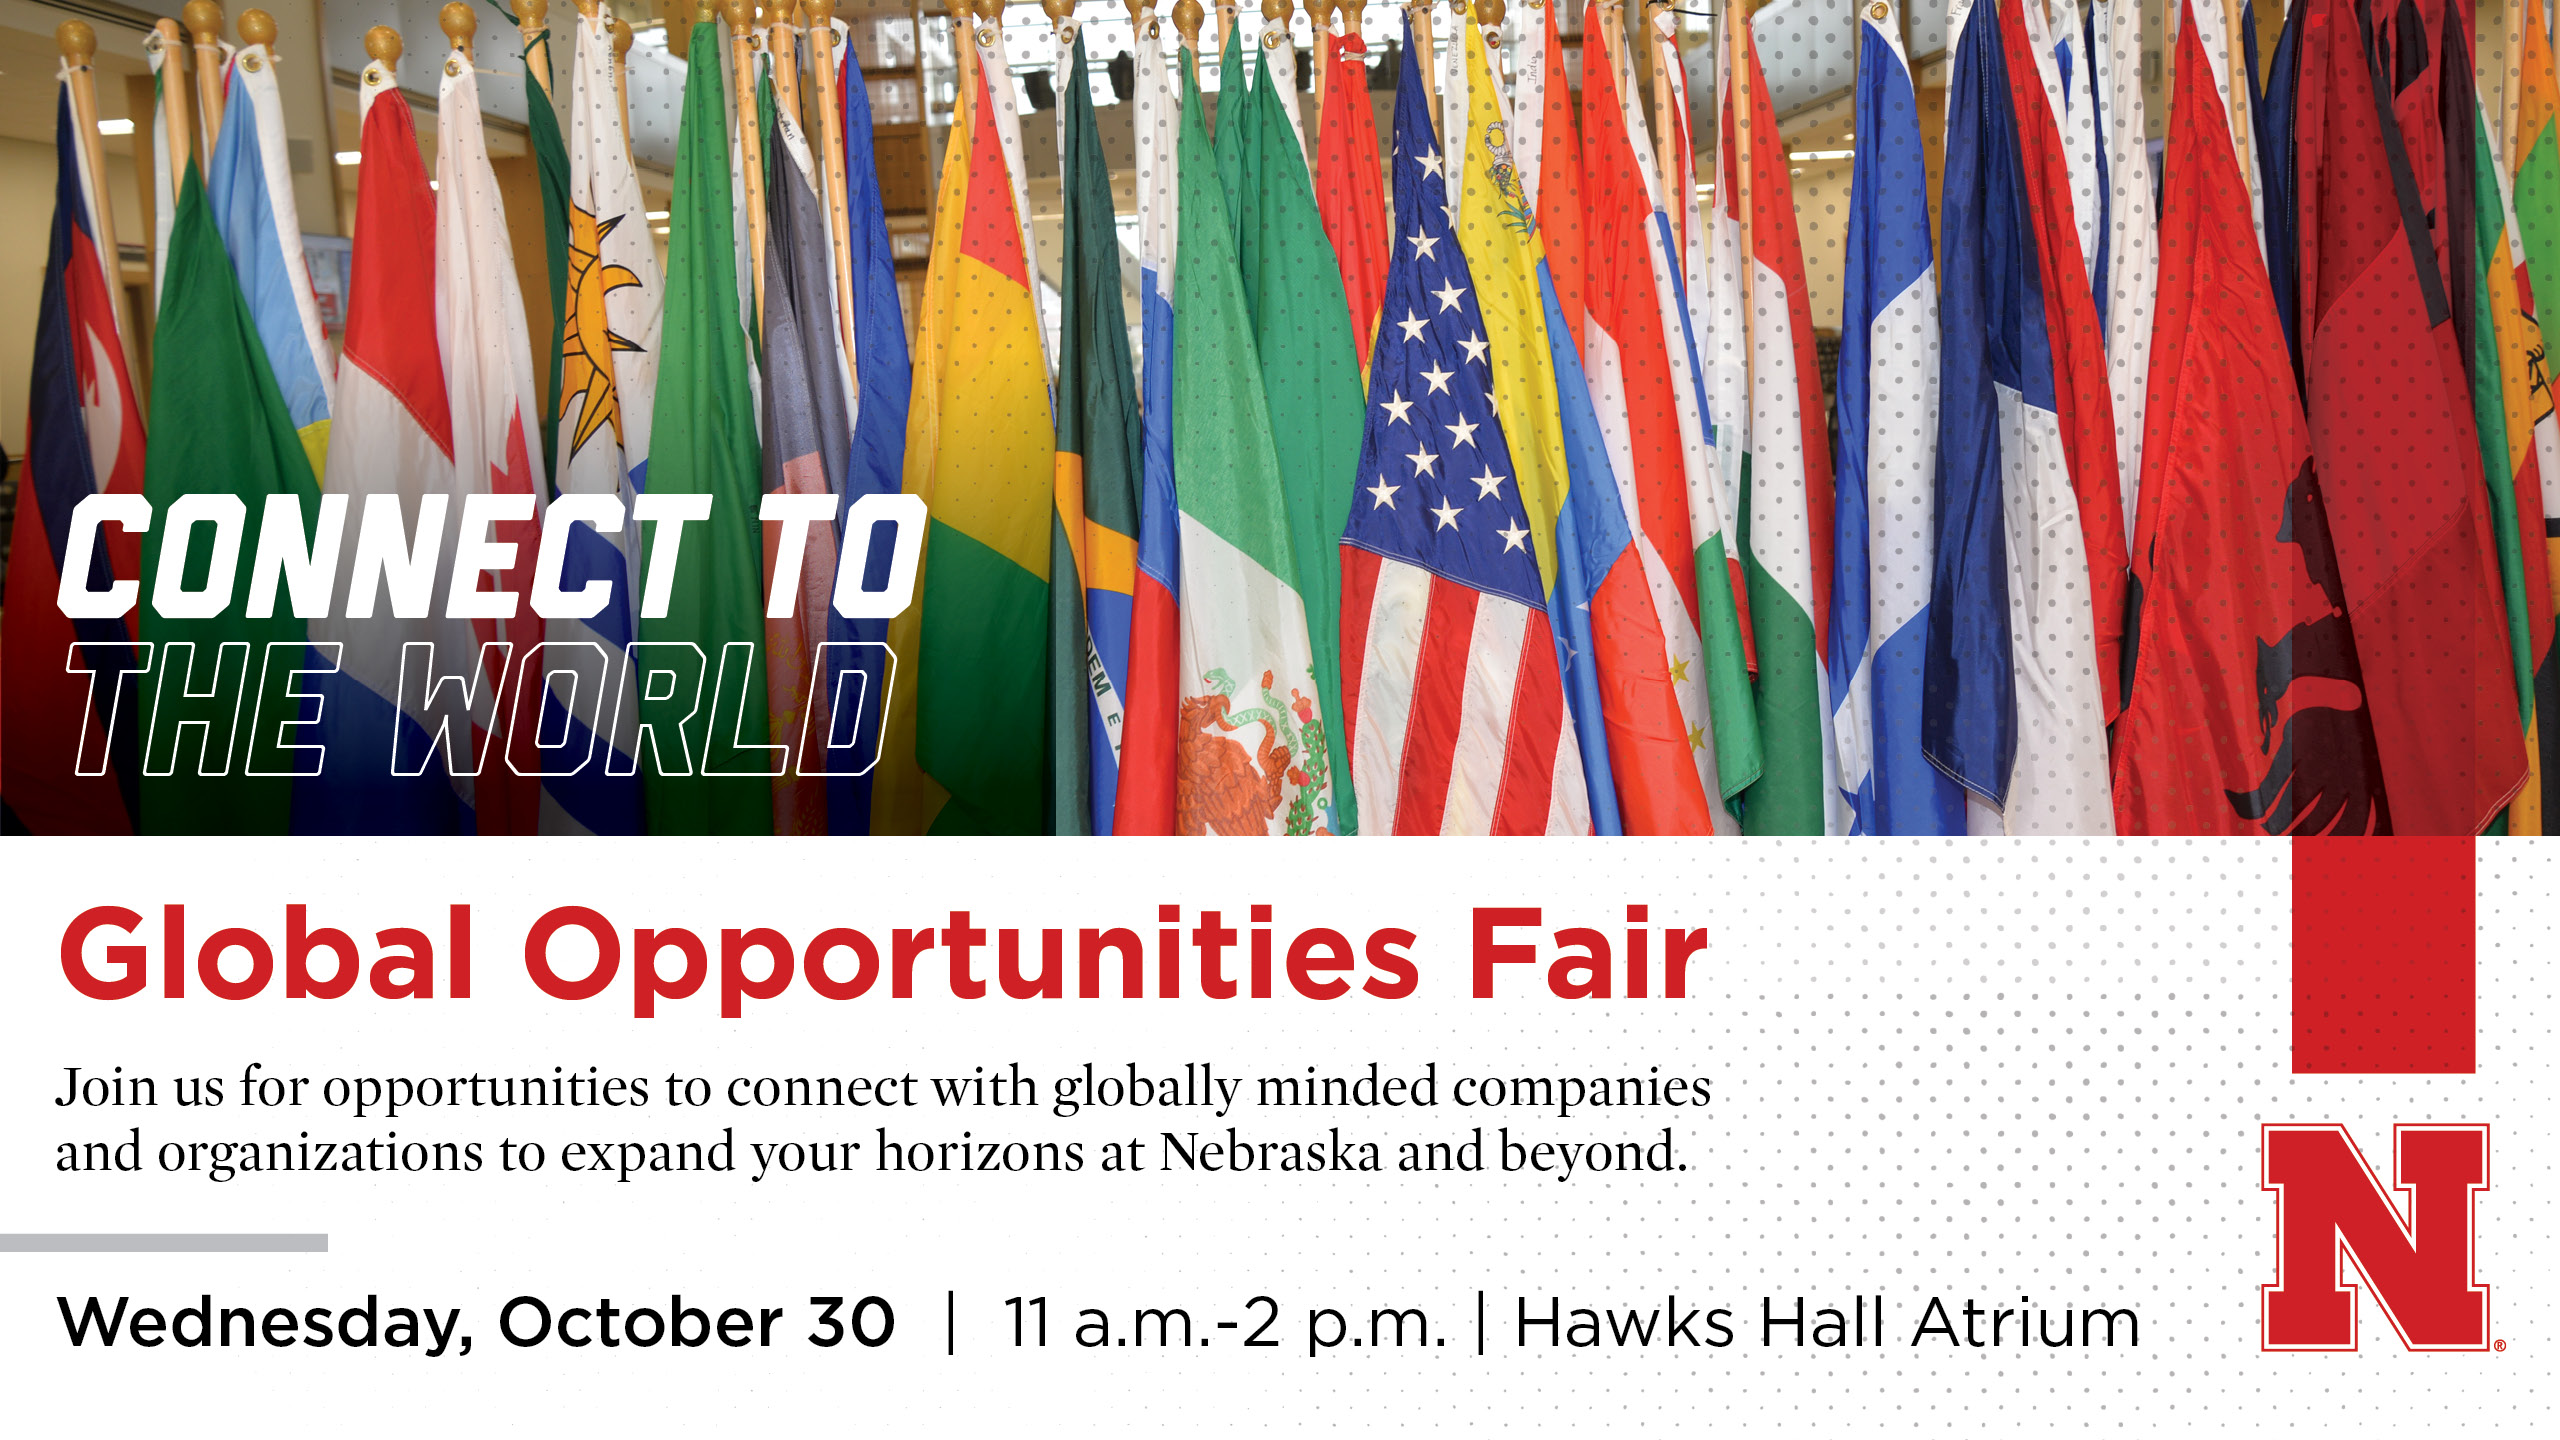 Global Opportunities Fair Oct. 30th 11AM-2PM